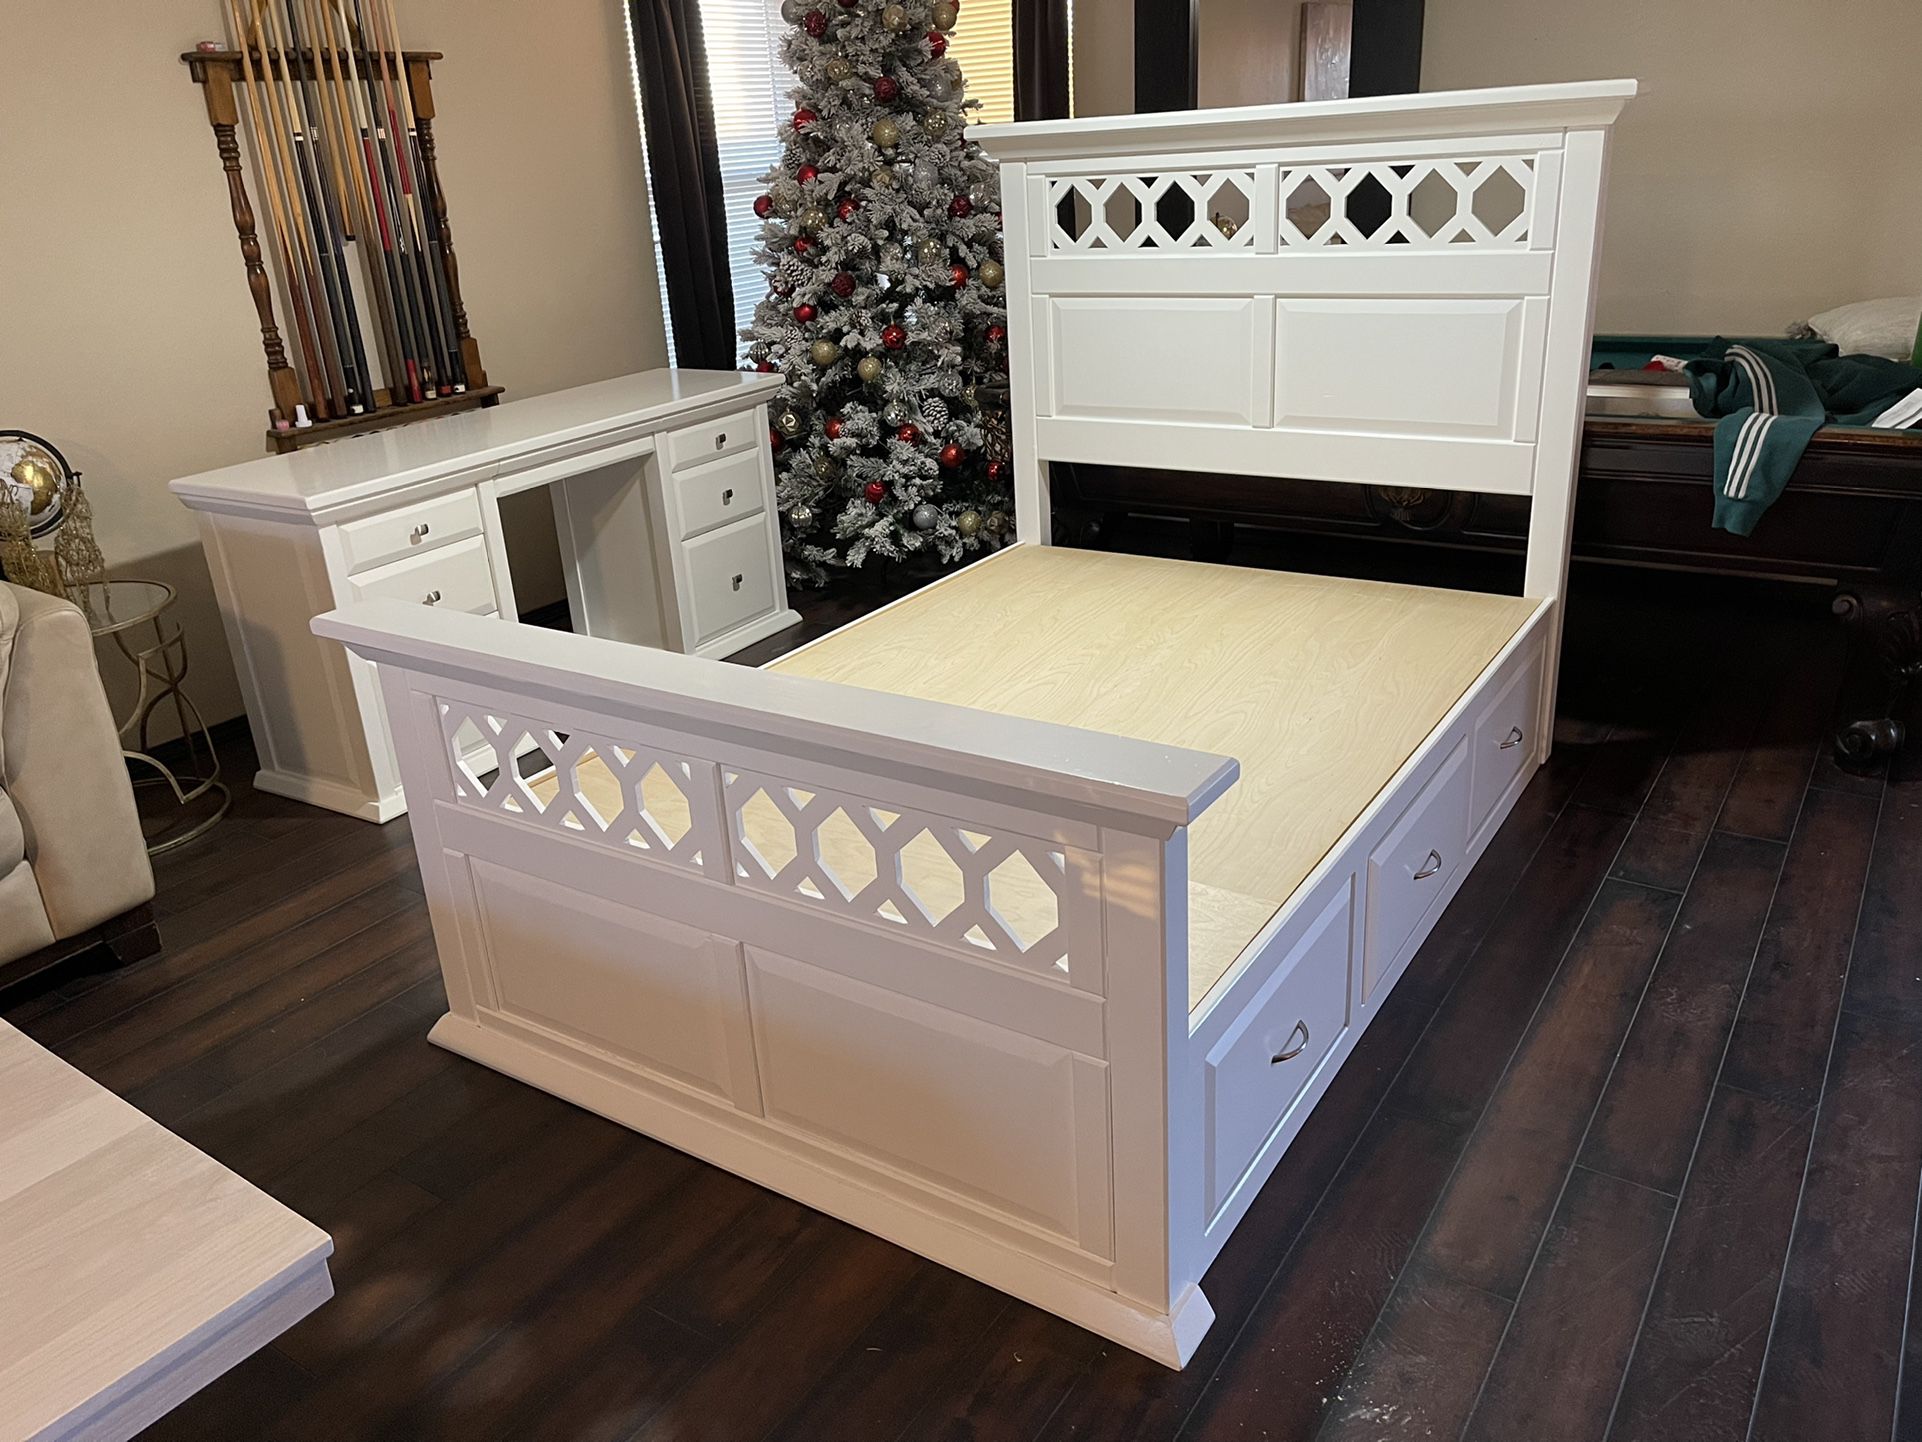 Bed With Desk Custom Made By https://offerup.com/redirect/?o=Z3JhZG9jcmVhdGlvbnMuY28=